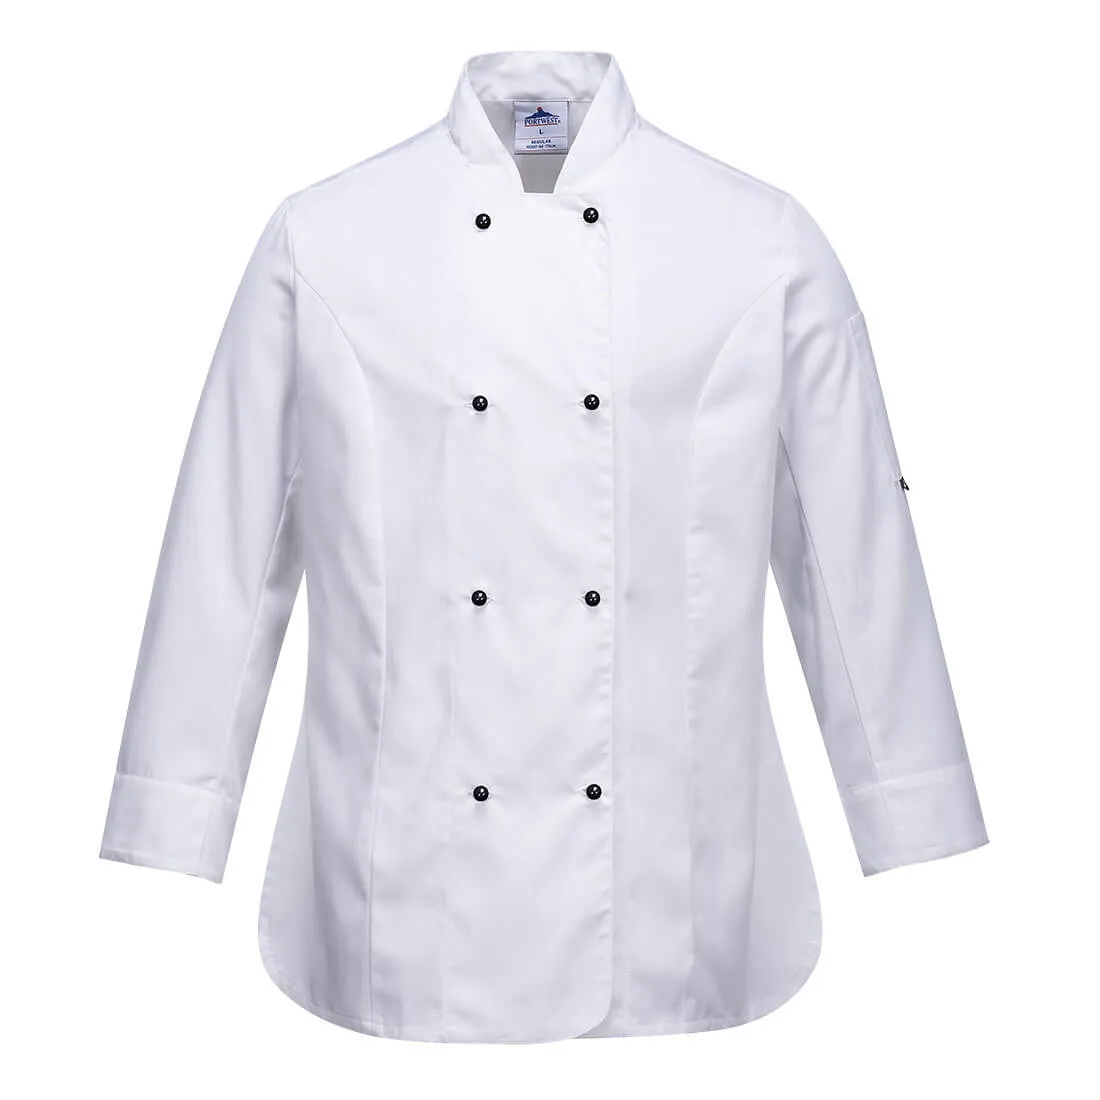 Portwest Ladies Rachel Chefs Jacket - White, M